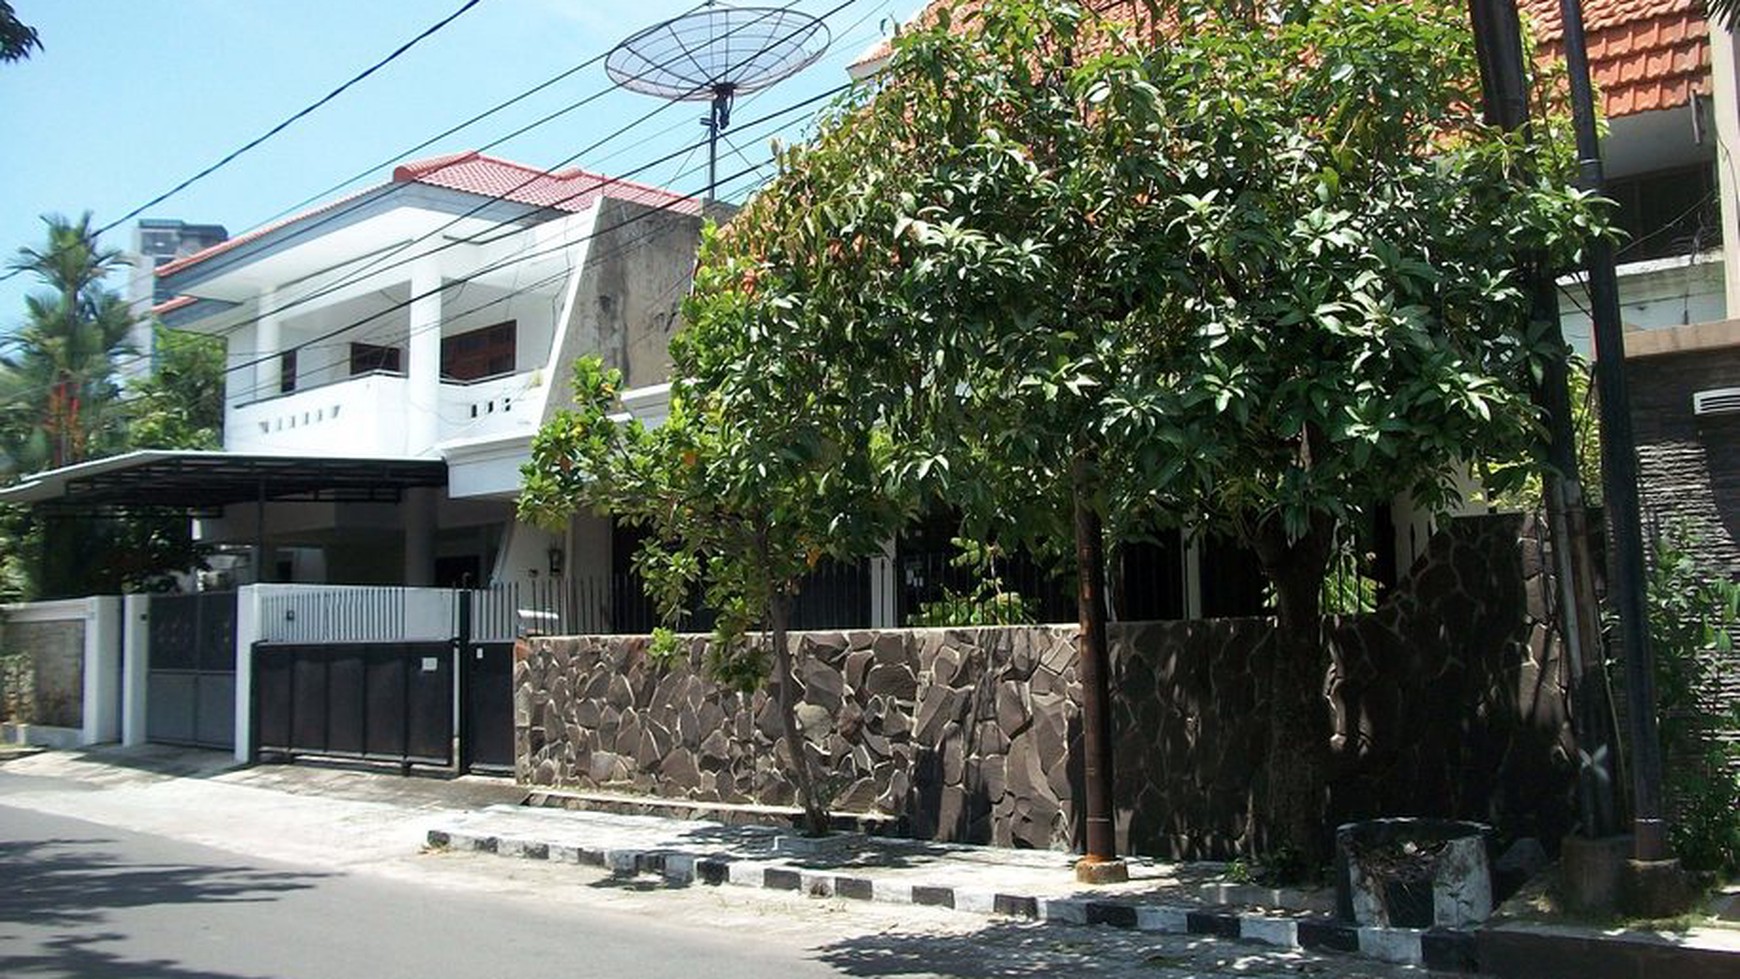 Rumah di Margorejo Indah Surabaya Selatan, Lokasi Strategis dekat Mall & Apartemen Plaza Marina, Row Jalan Lebar